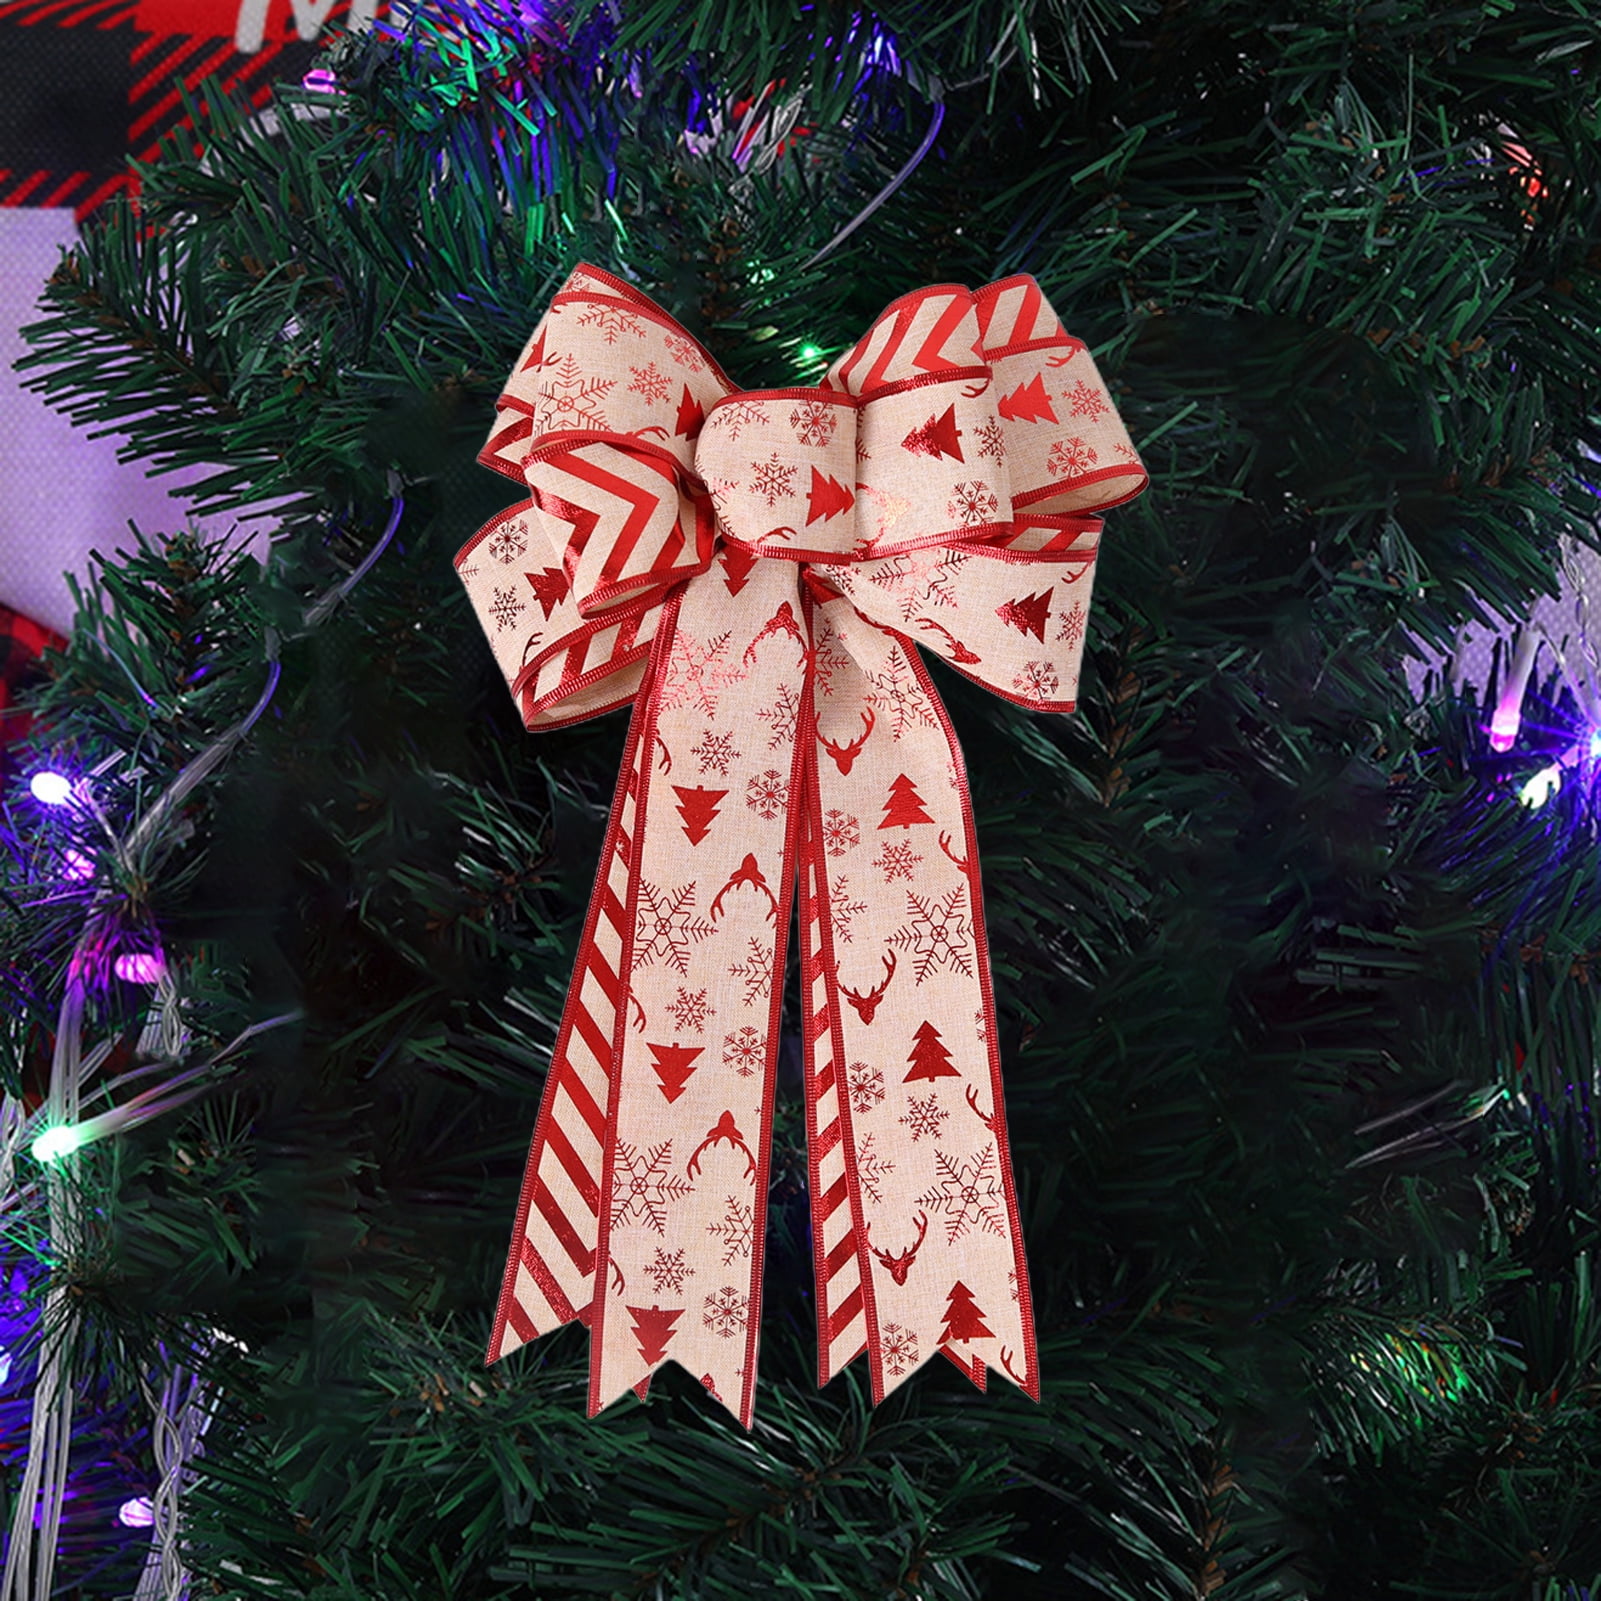 HOMEMAXS 5pcs/Pack Glittering Fabric Christmas Ribbon Bow Gift